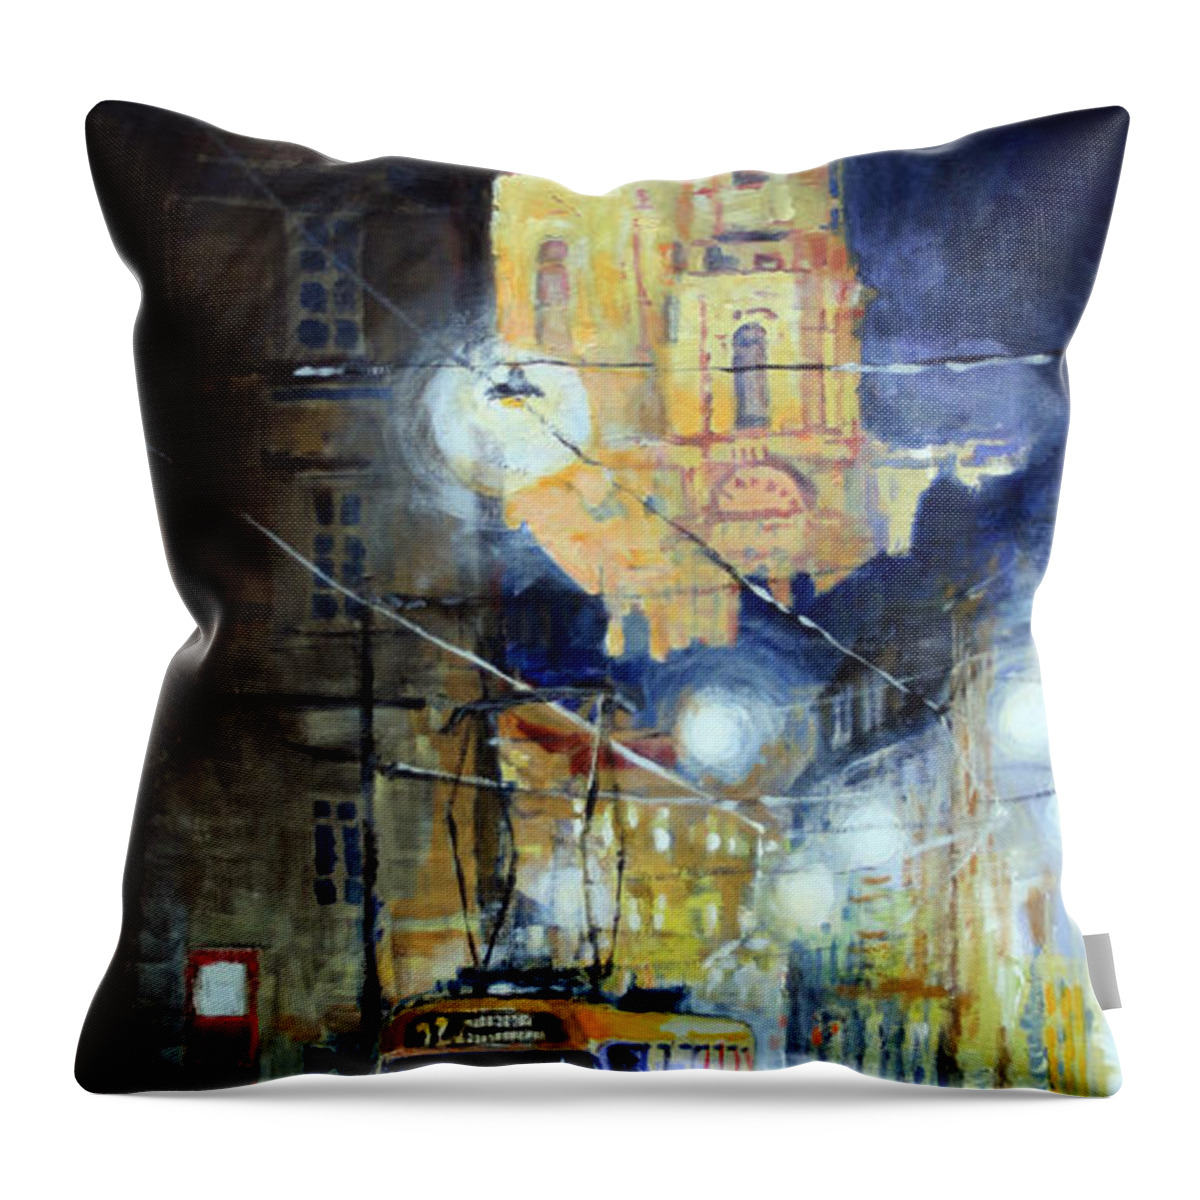 Acrylic On Canvas Throw Pillow featuring the painting Midnight Tram Prague Karmelitska str by Yuriy Shevchuk